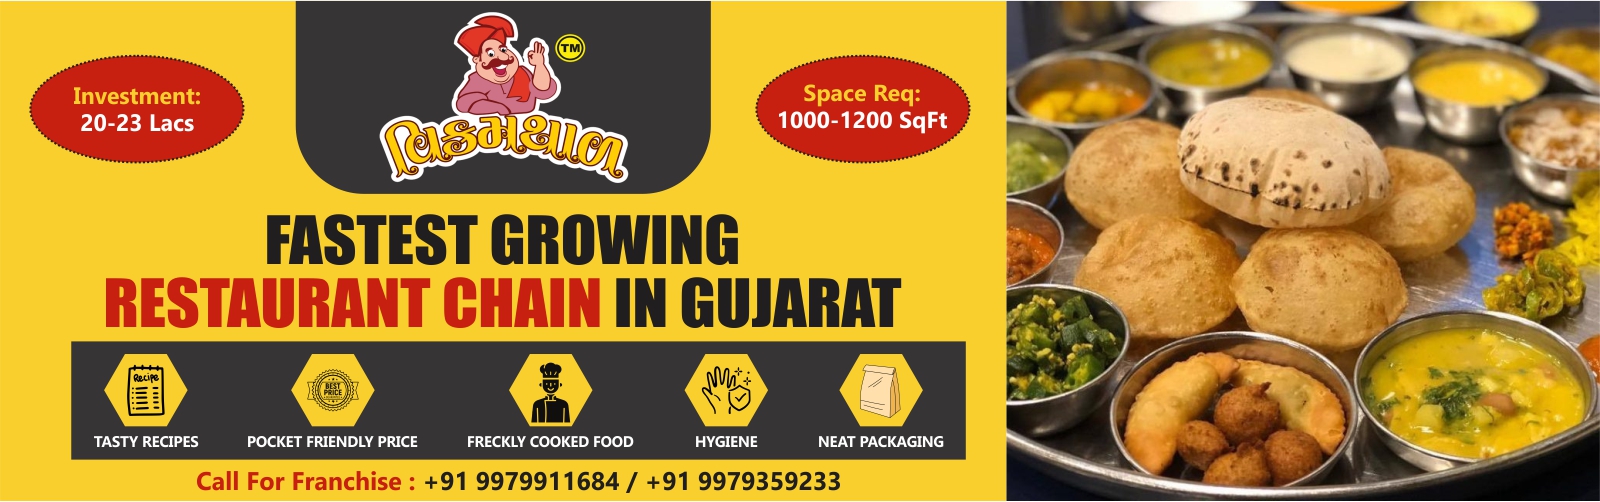 admin/uploads/brand_registration/Vikram Thal - Fastest Growing Restaurant Chain in Gujarat